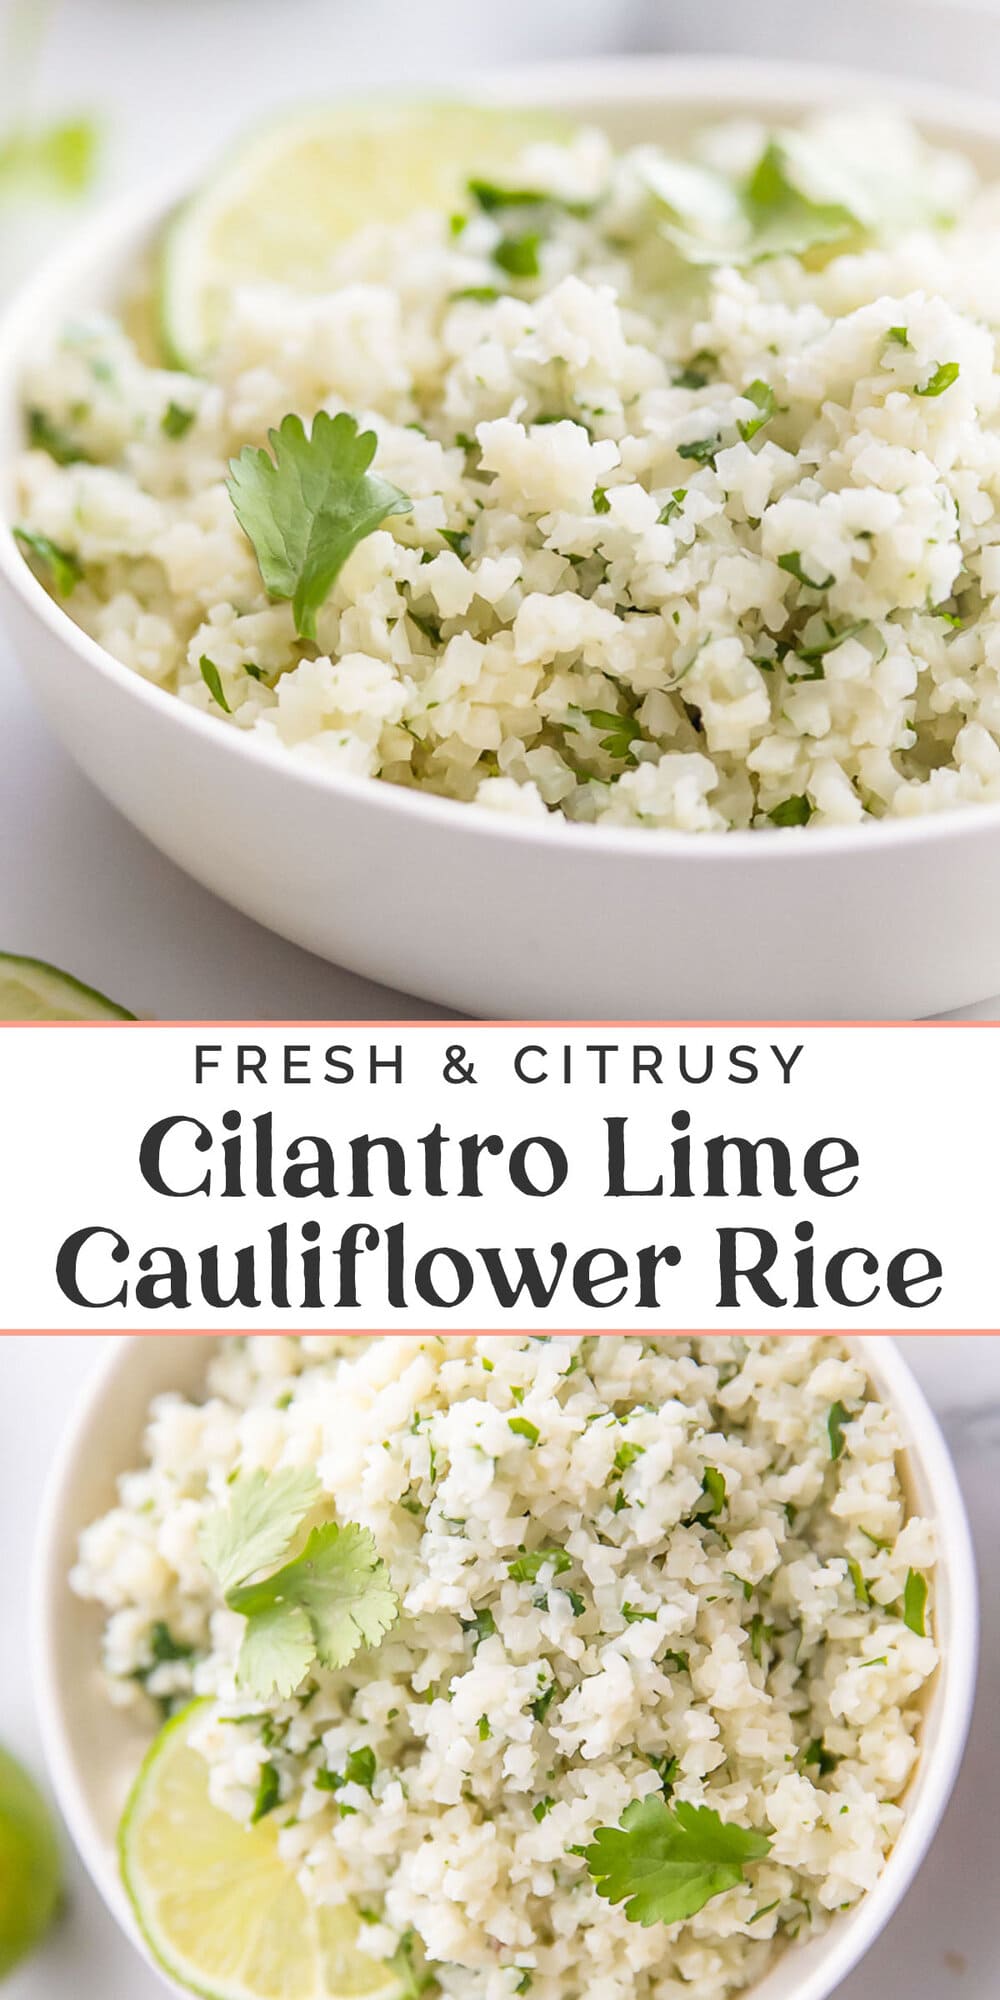 Pin graphic for cilantro lime cauliflower rice.